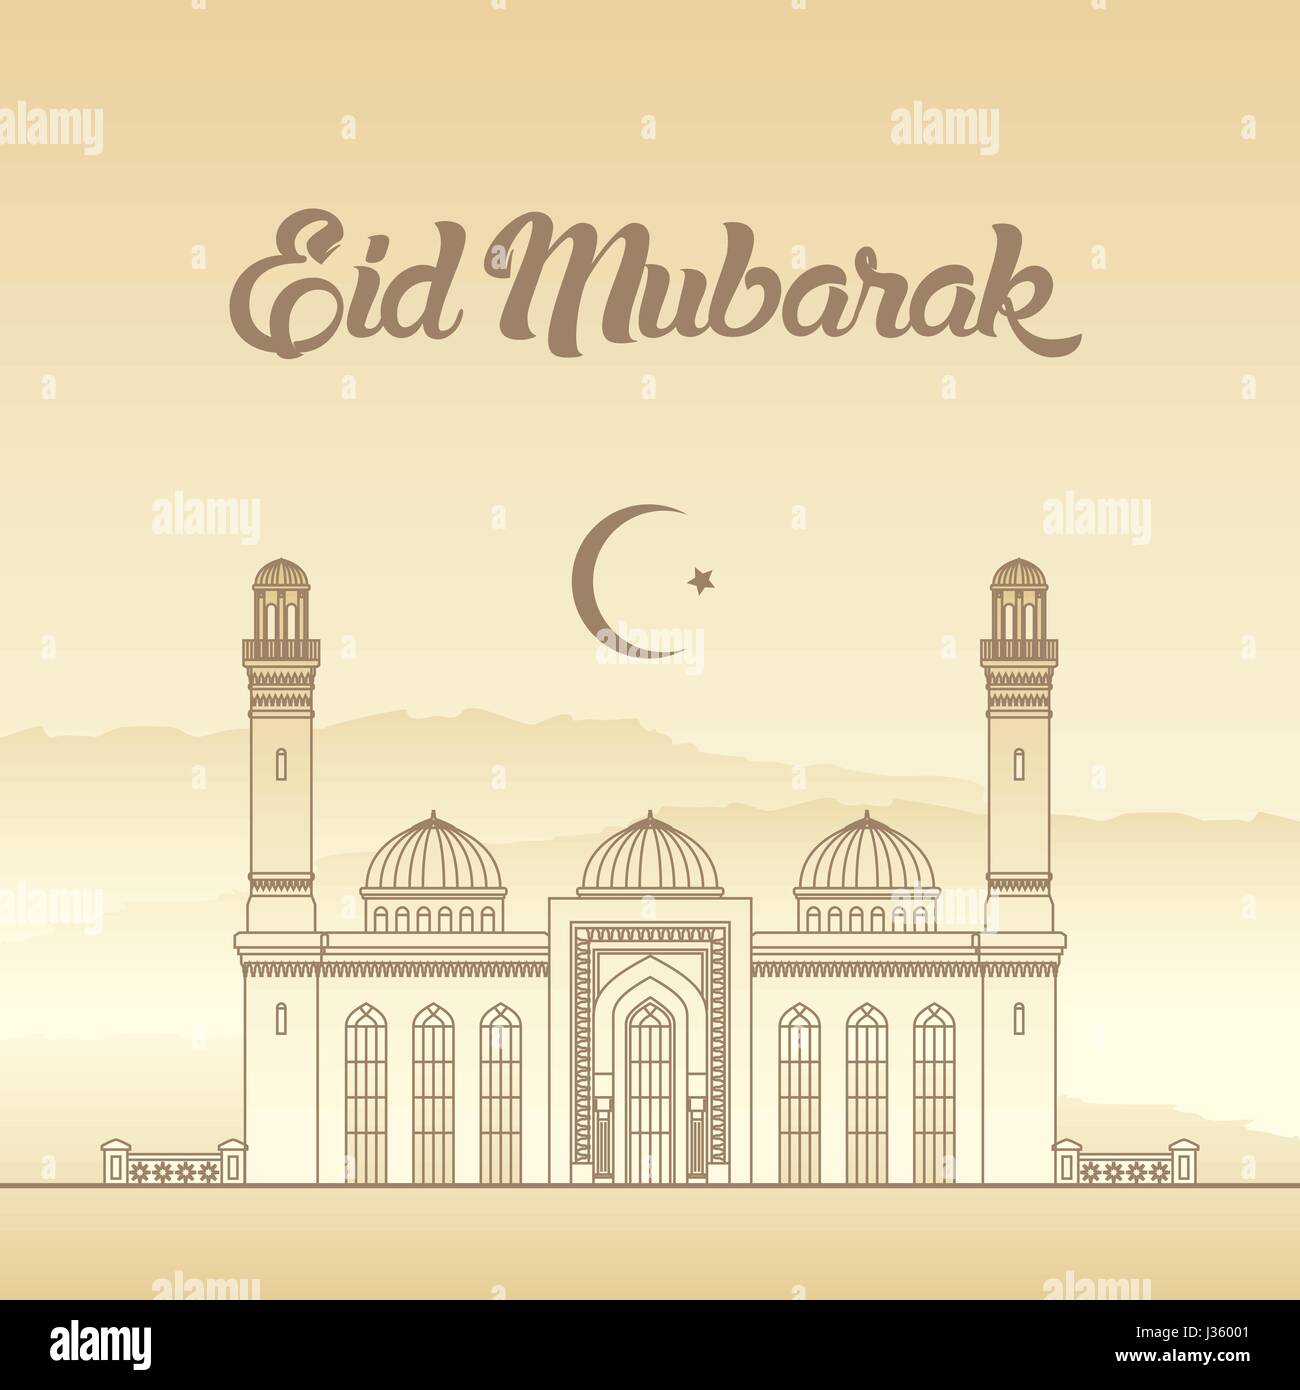 Eid Mubarak Ramadan greeting card illustrazione vettoriale. Illustrazione Vettoriale